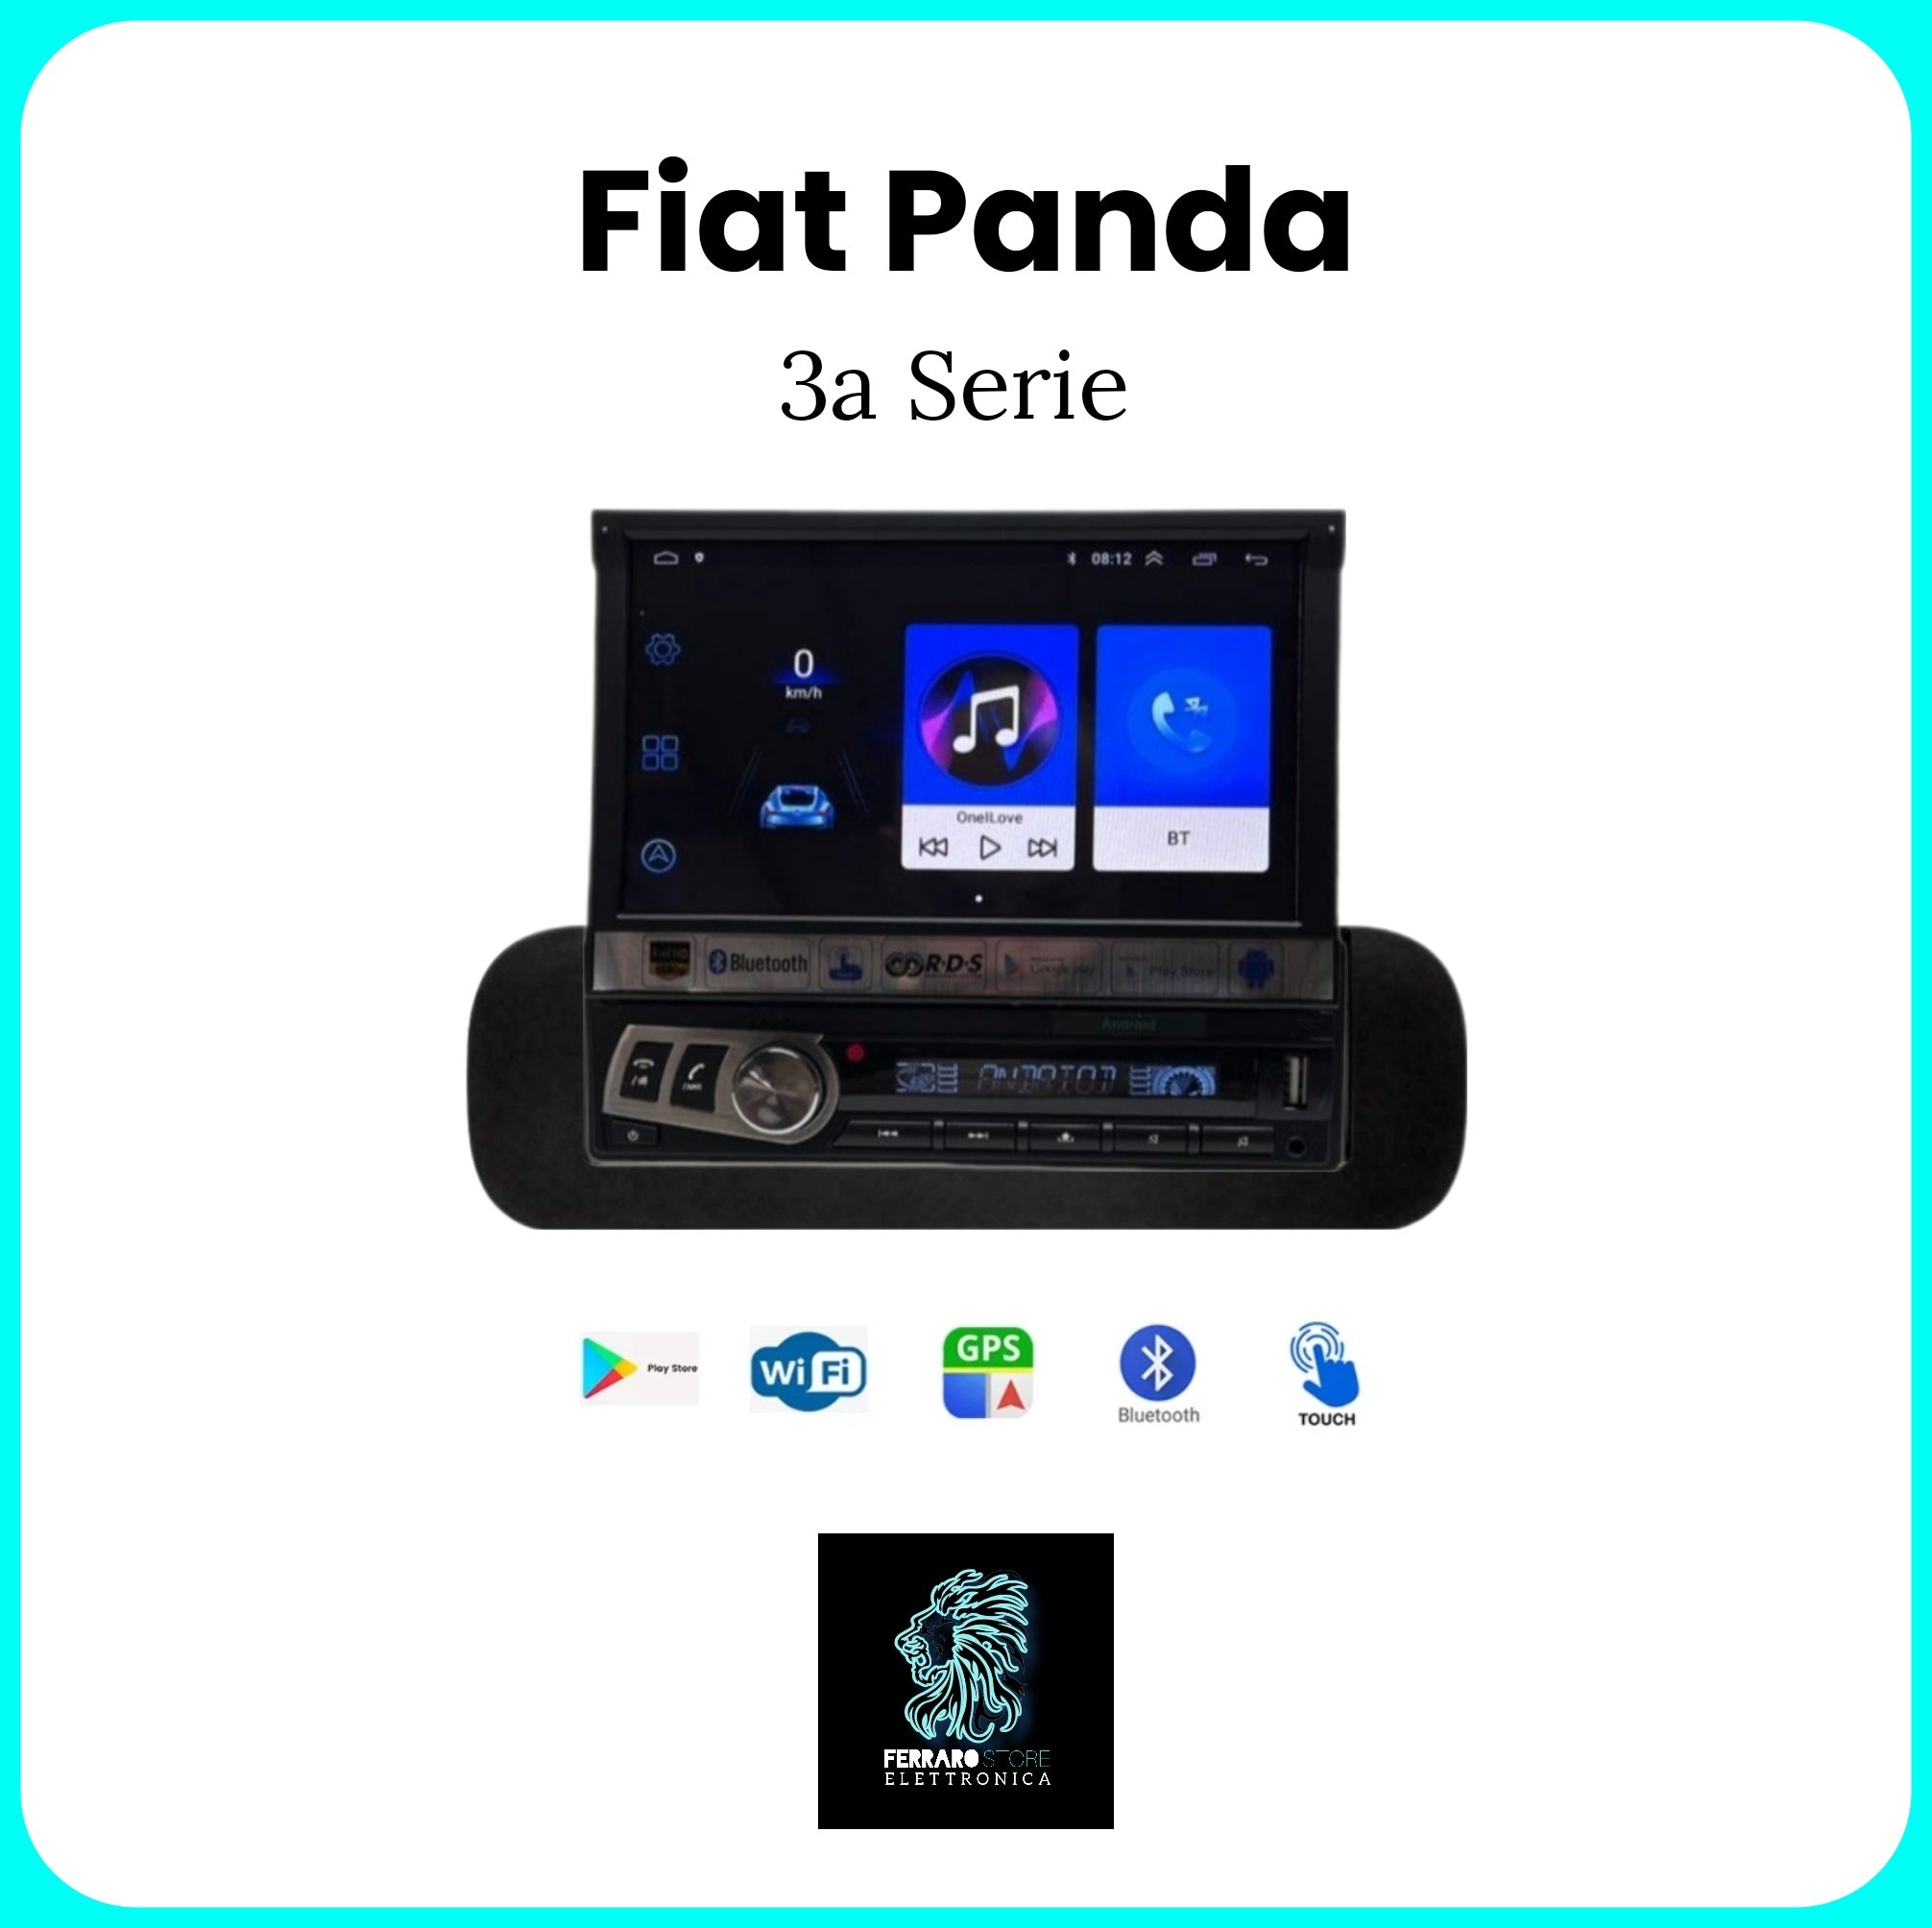 Autoradio per FIAT Panda 3a - 1Din 7"Pollici, Motorizzato Android, GPS, WiFi, Radio, Bluetooth, FM, SWC, PlayStore